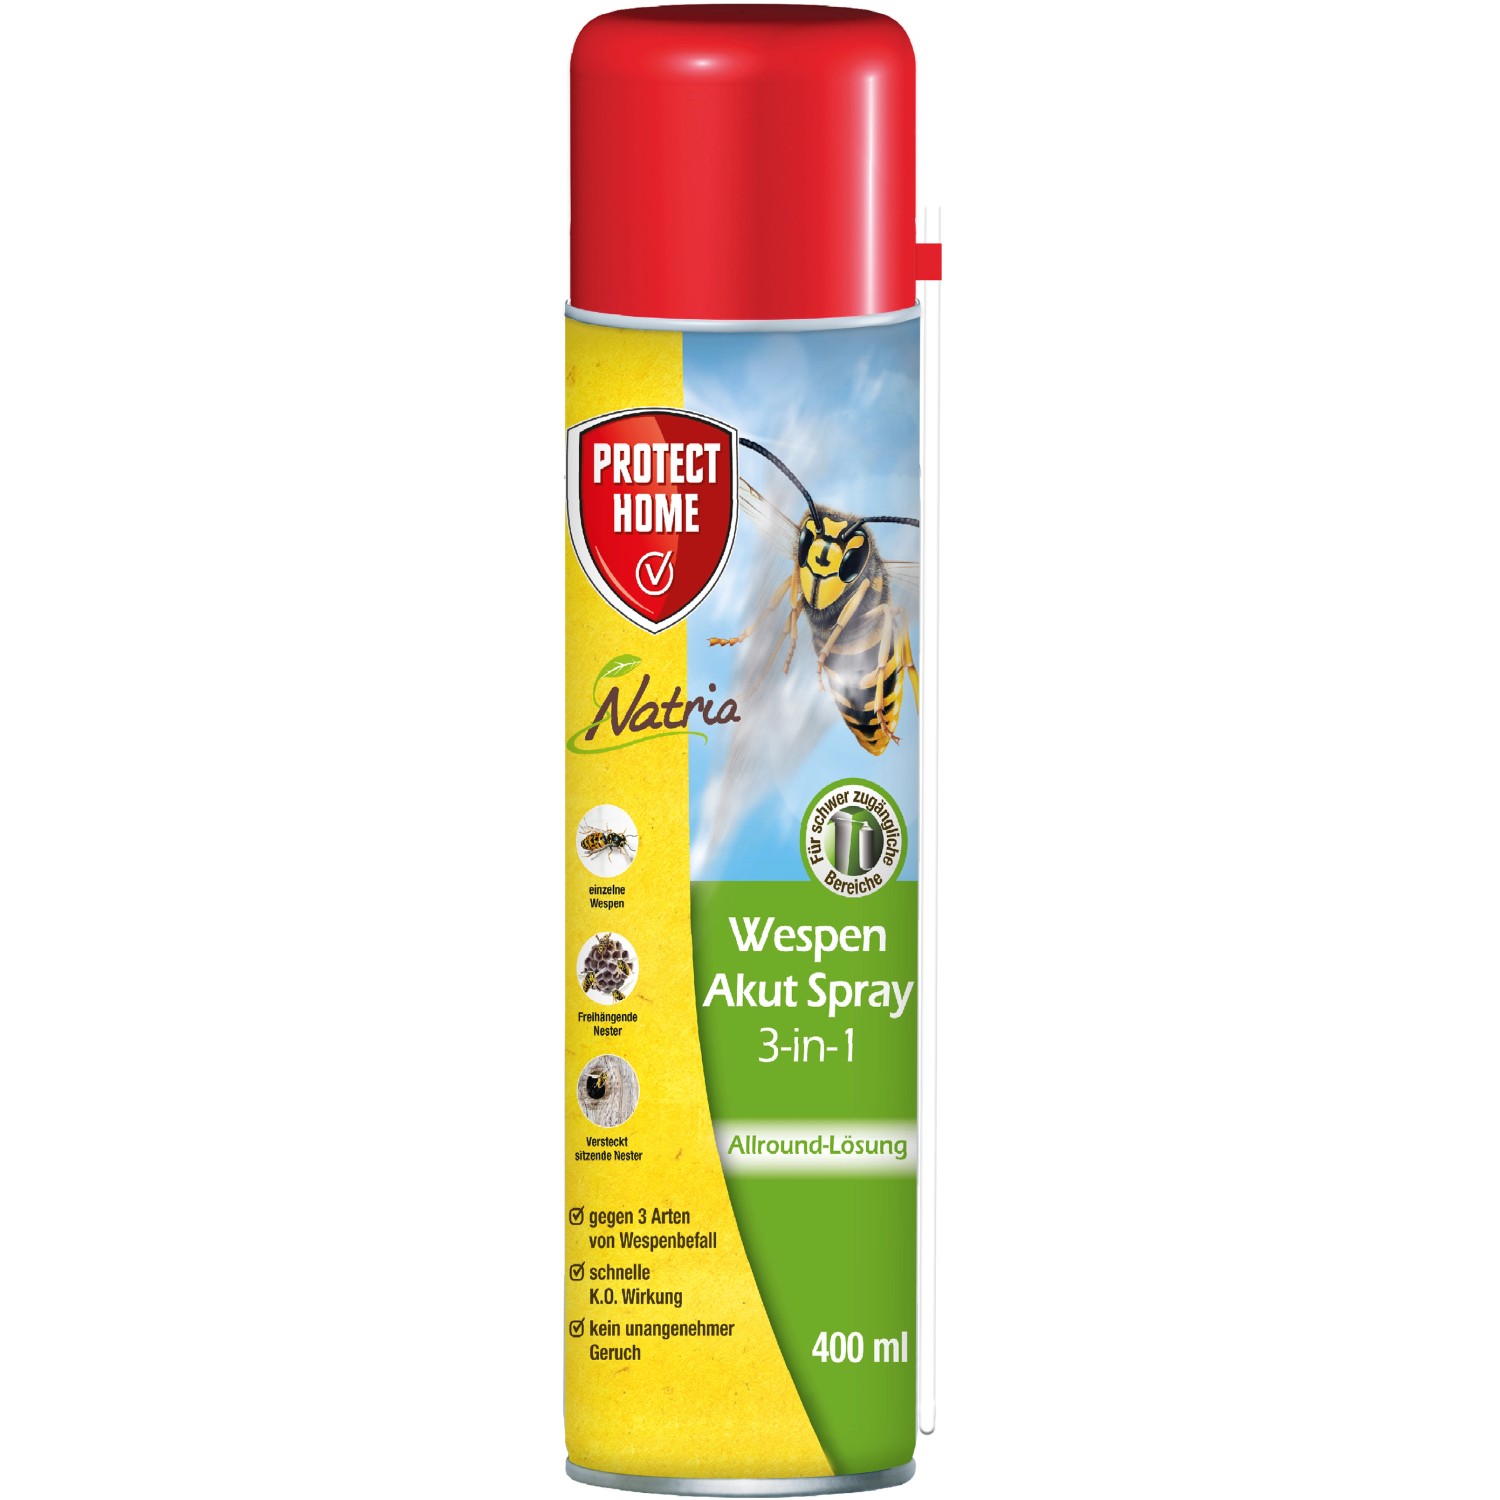 Protect Home Natria Wespen Akut Spray (3-in-1) 400 ml